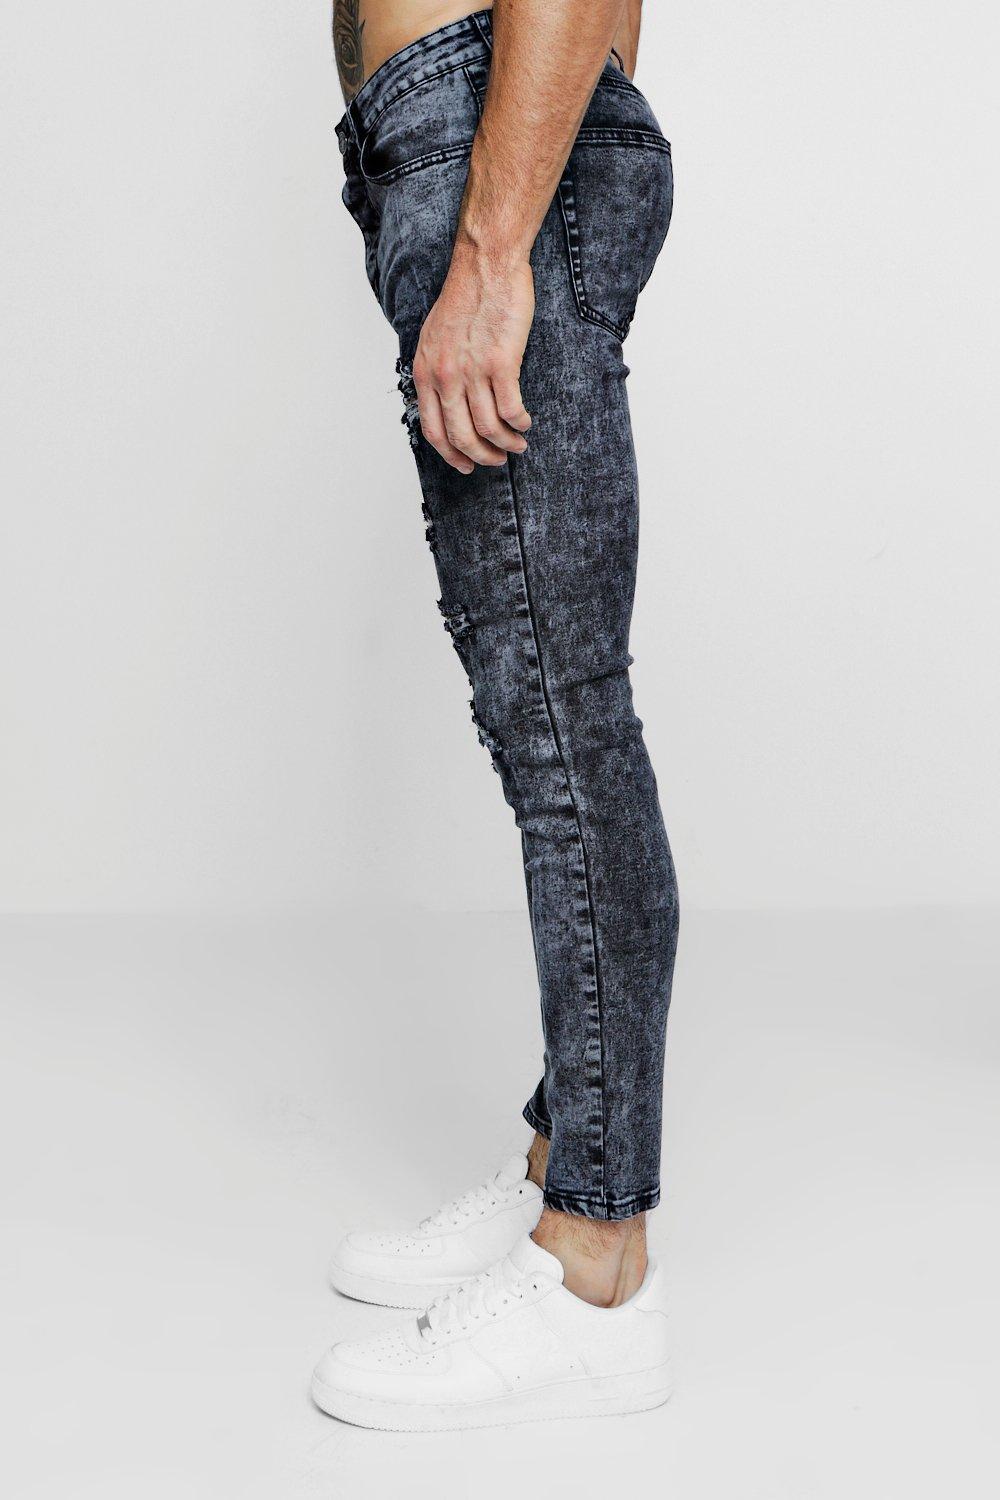 Boohoo Black Acid Wash Skinny Jeans Women's Size 16 New - beyond exchange